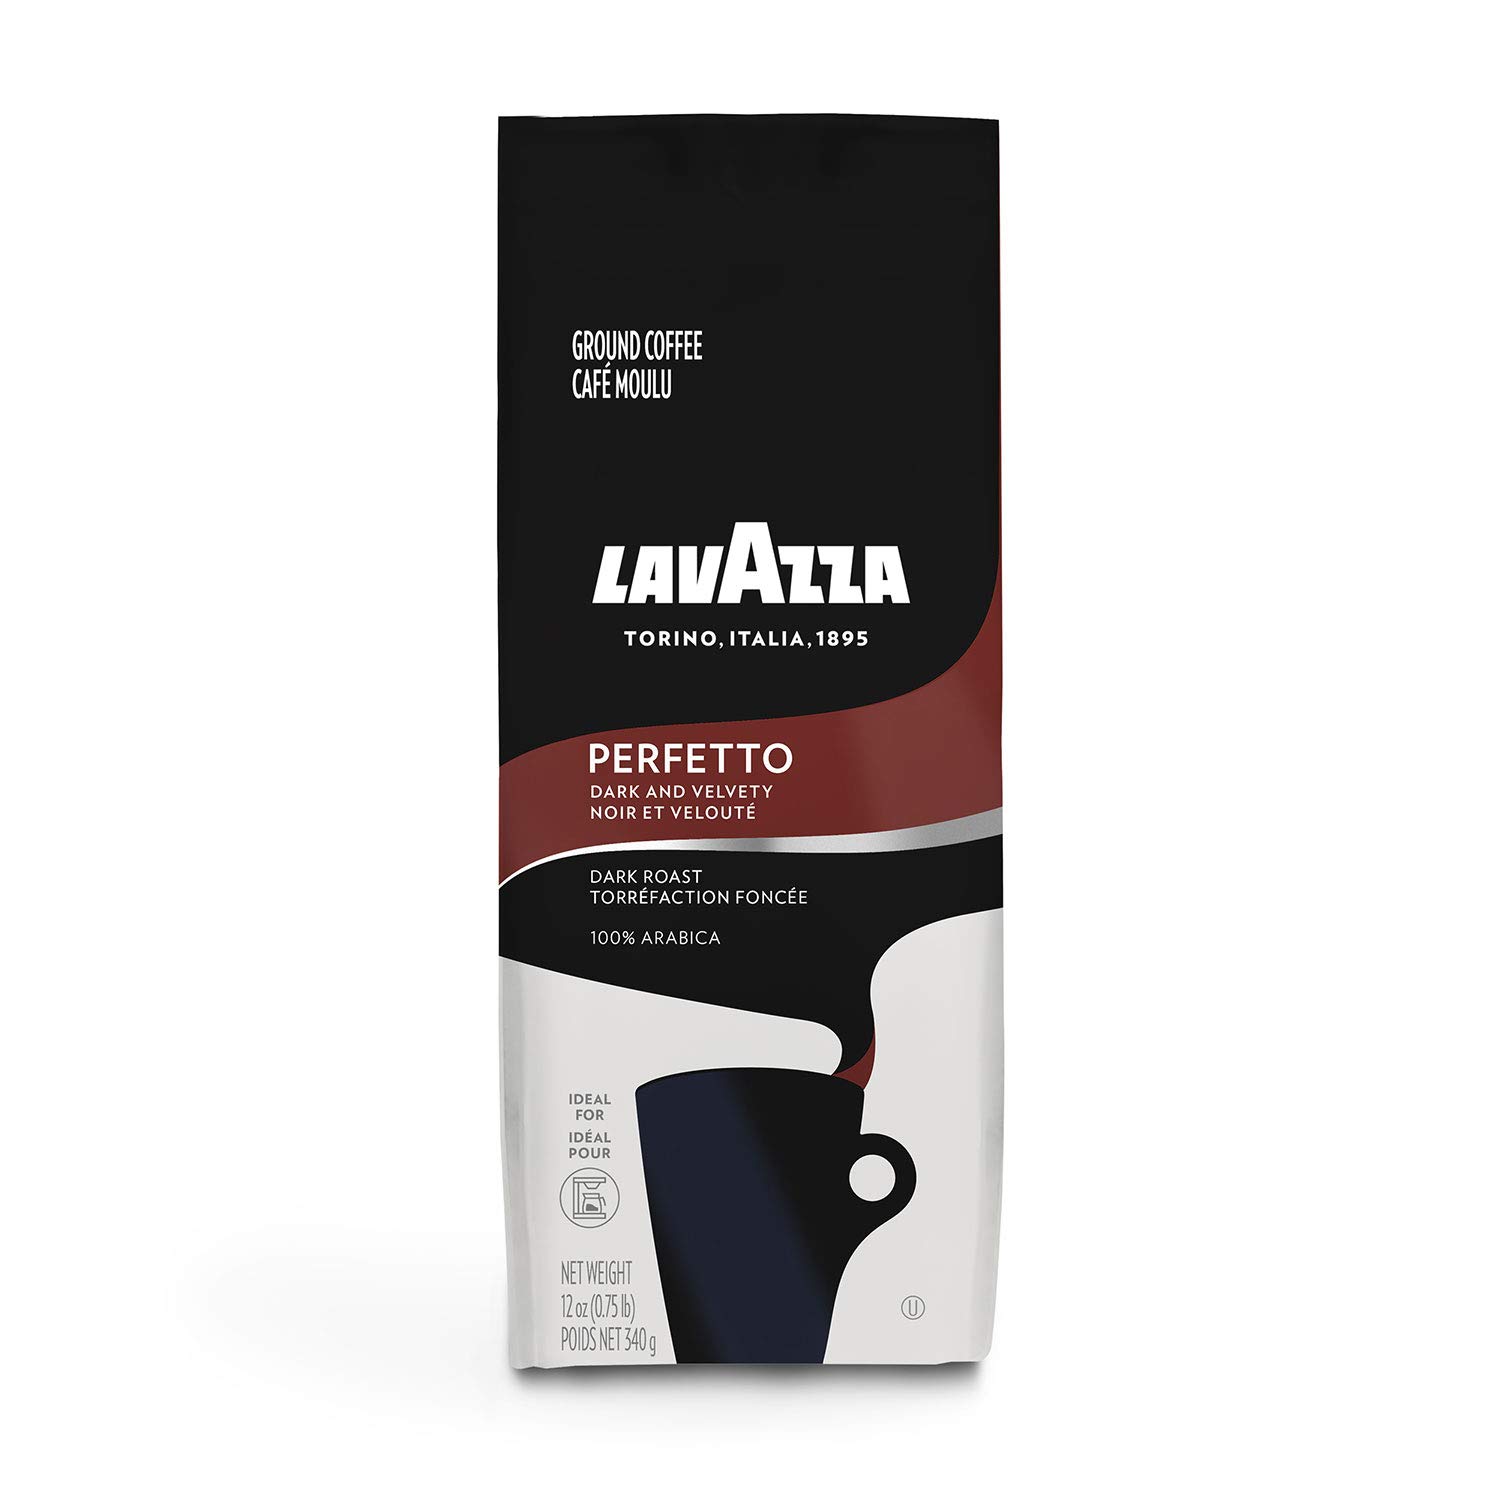 12-Oz Lavazza Perfetto Dark Roast Ground Coffee $4.37 w/ S&S + Free Shipping w/ Prime or on $35+